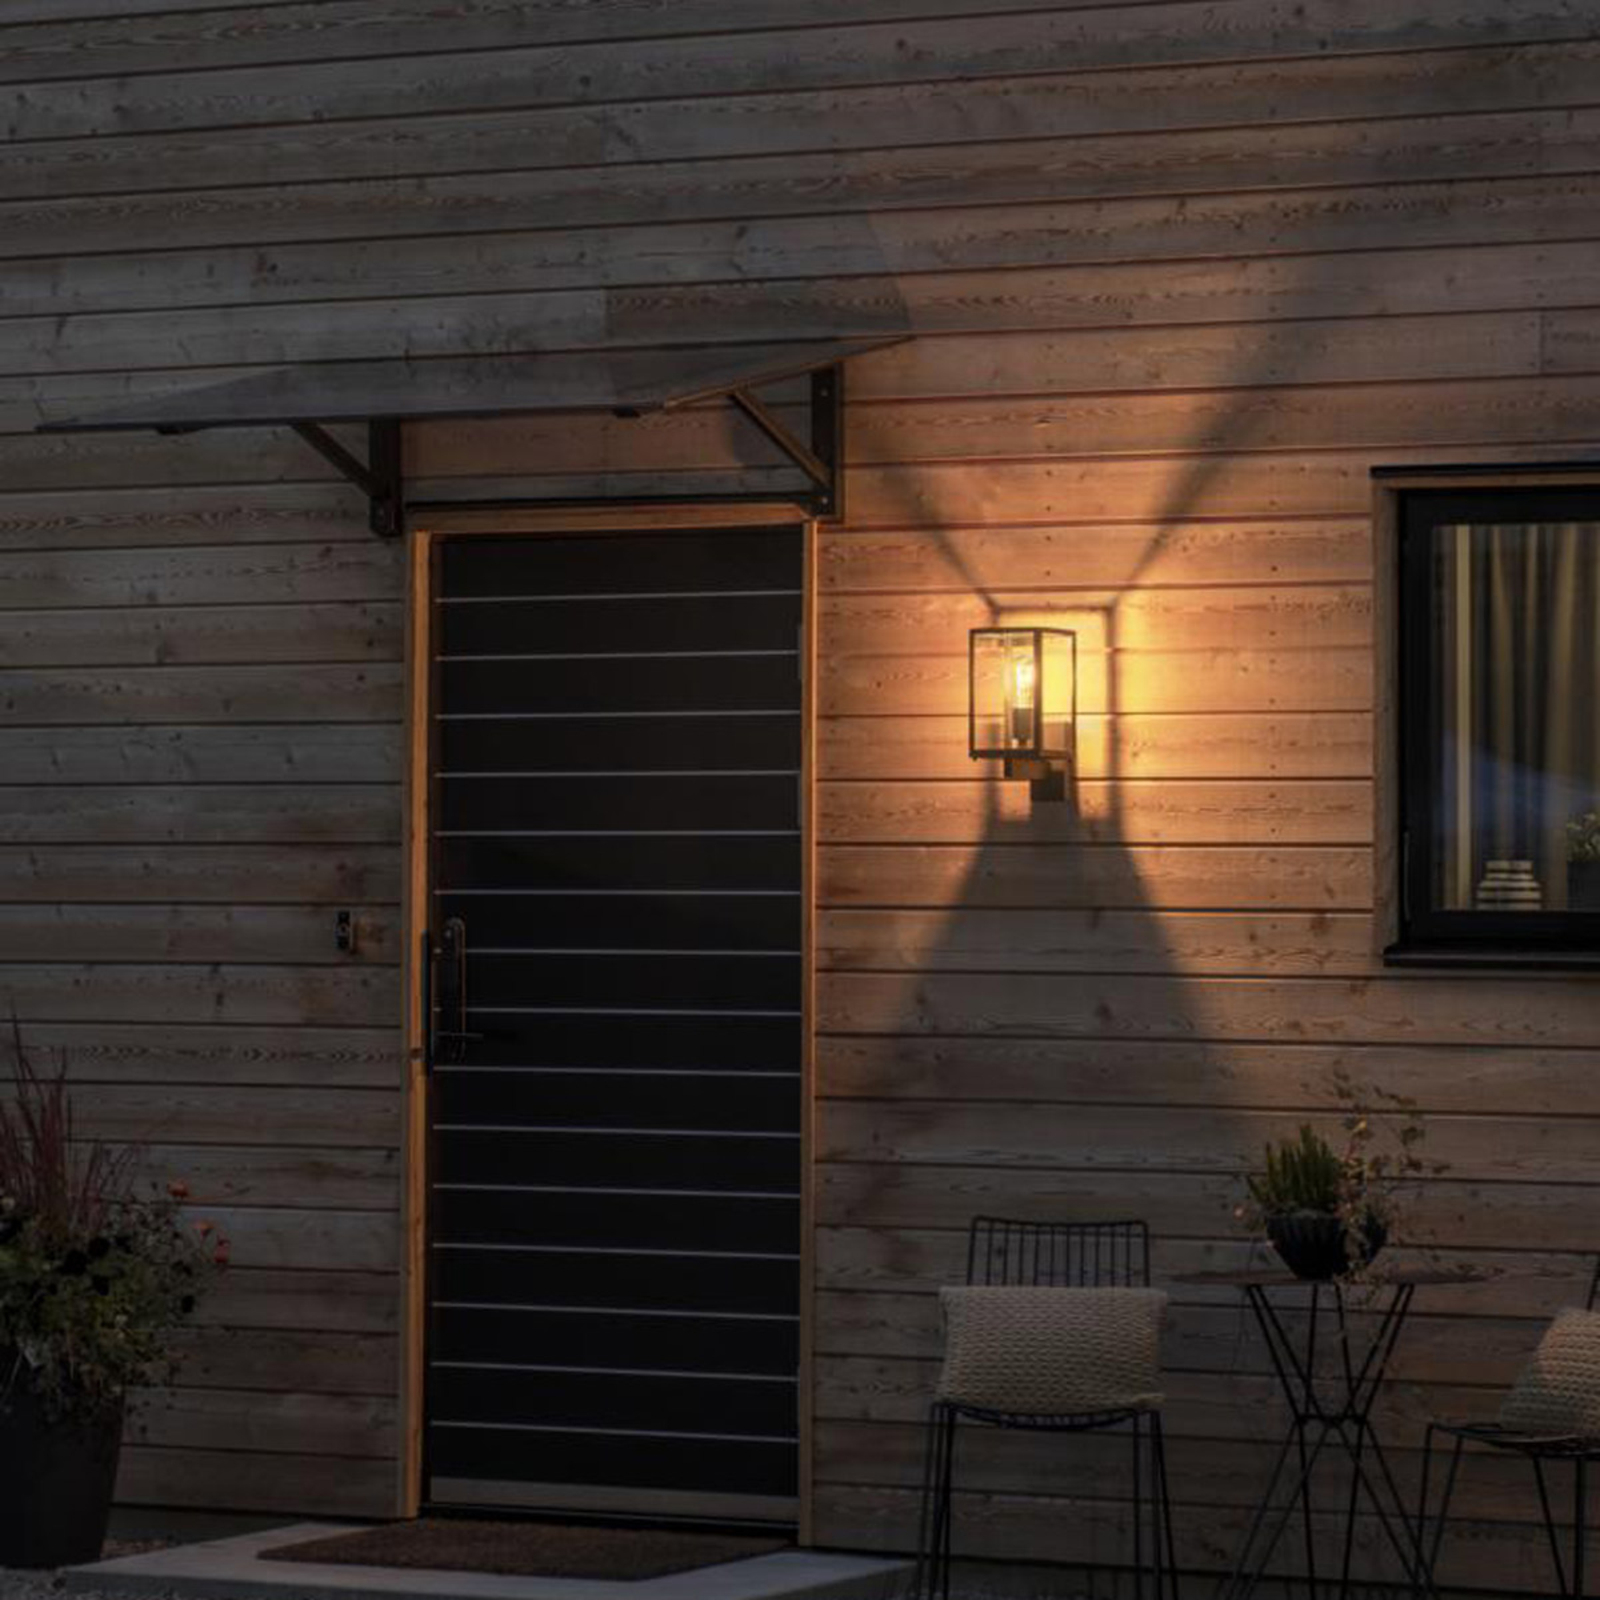 Carpi outdoor wall light, black, width 16.5 cm